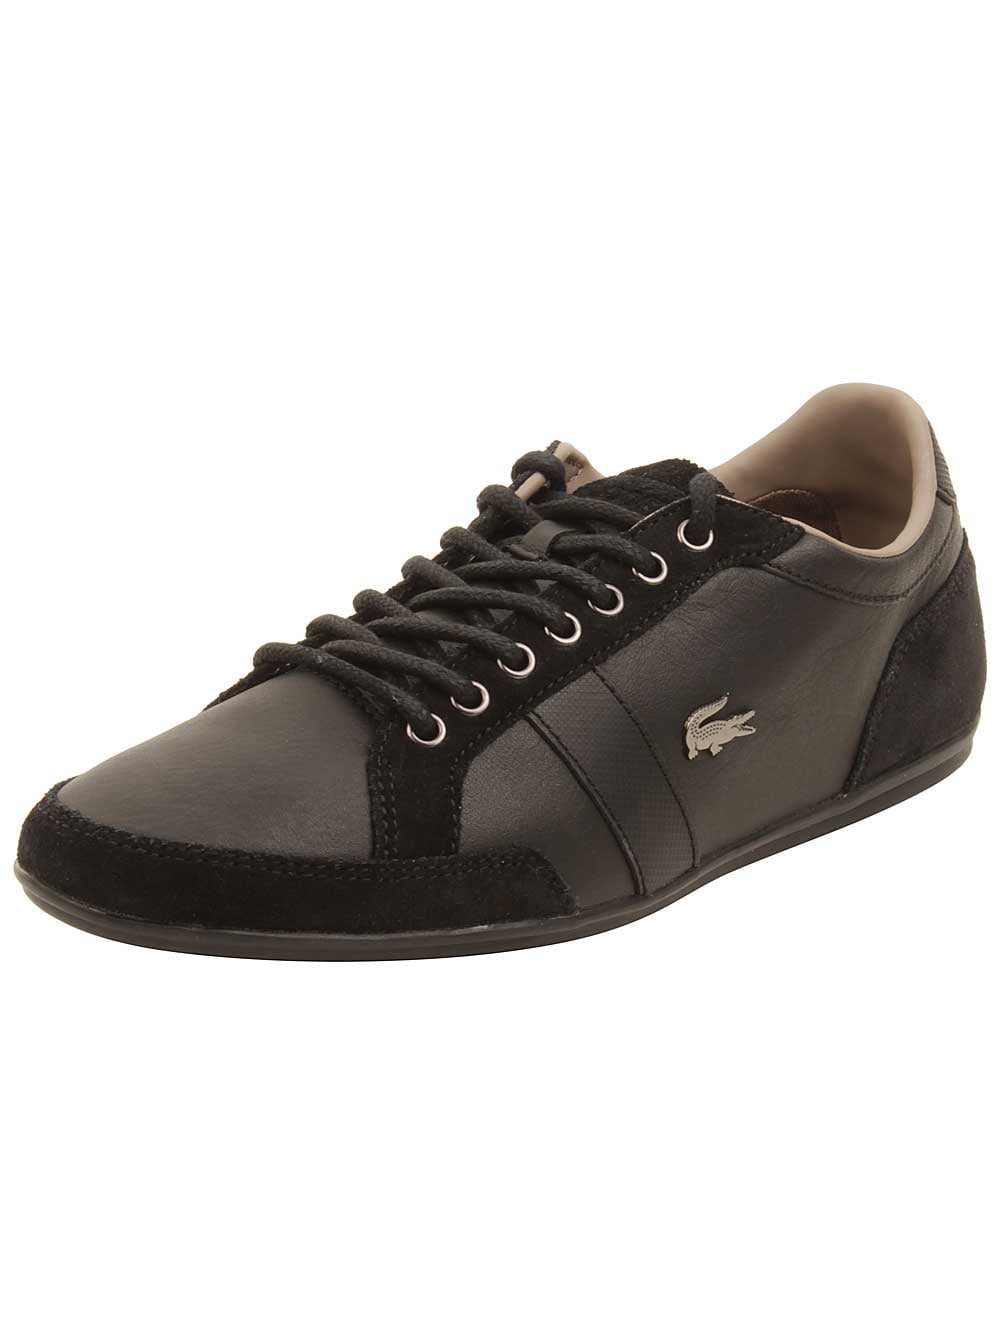 Lacoste Alisos 23 Sneakers in Black - Walmart.com